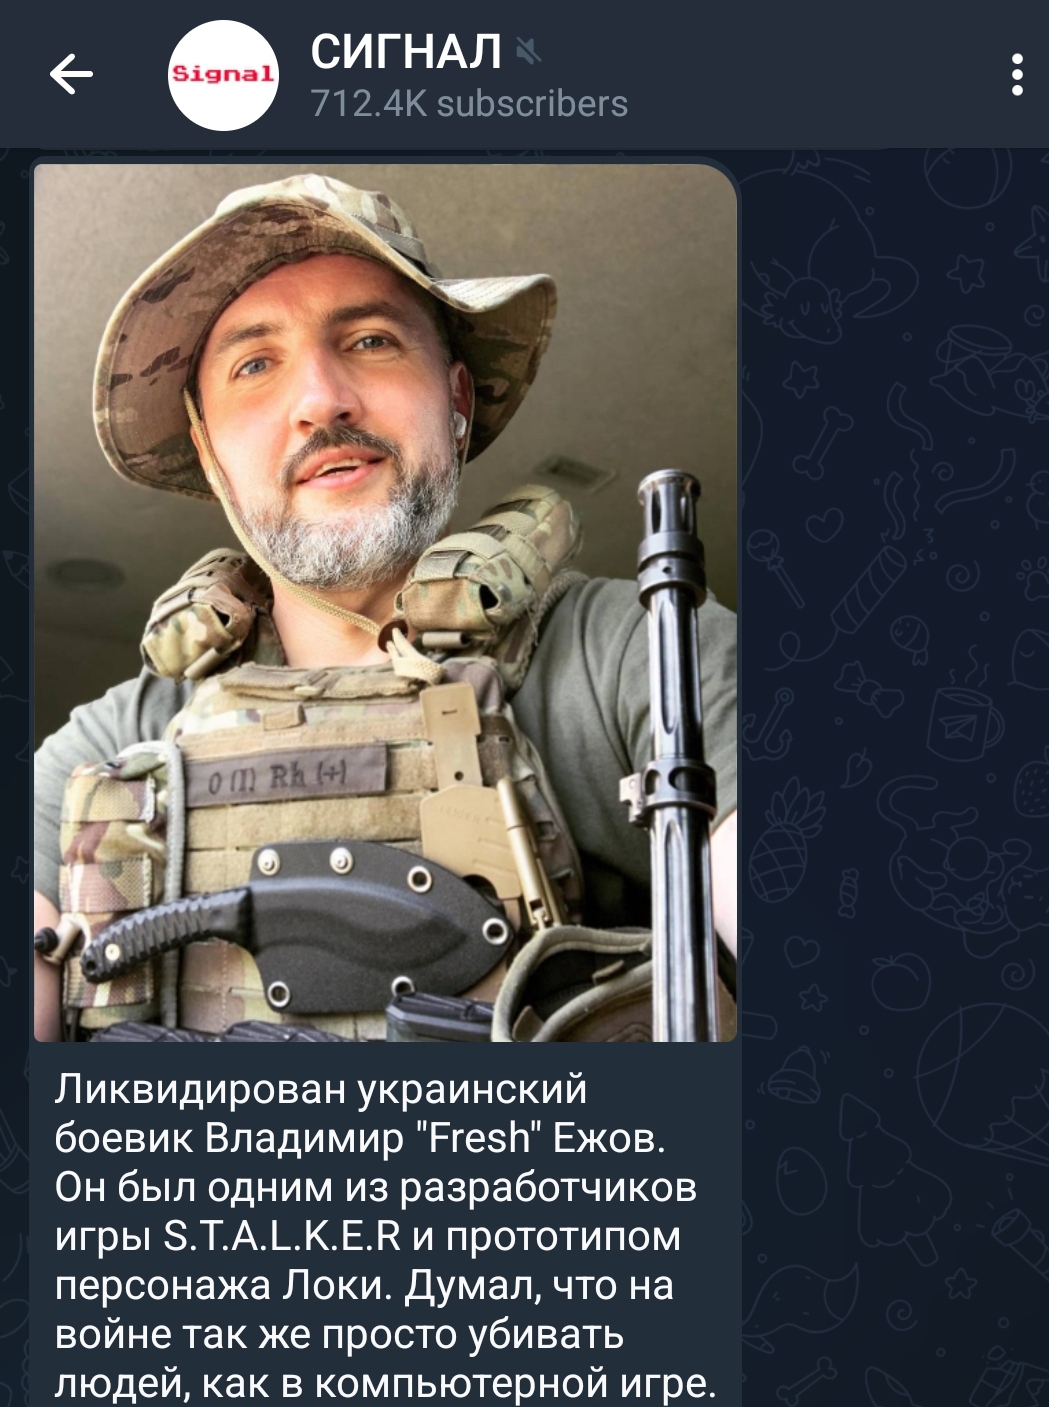 News of Volodymyr Ezhov's death reported on Telegram